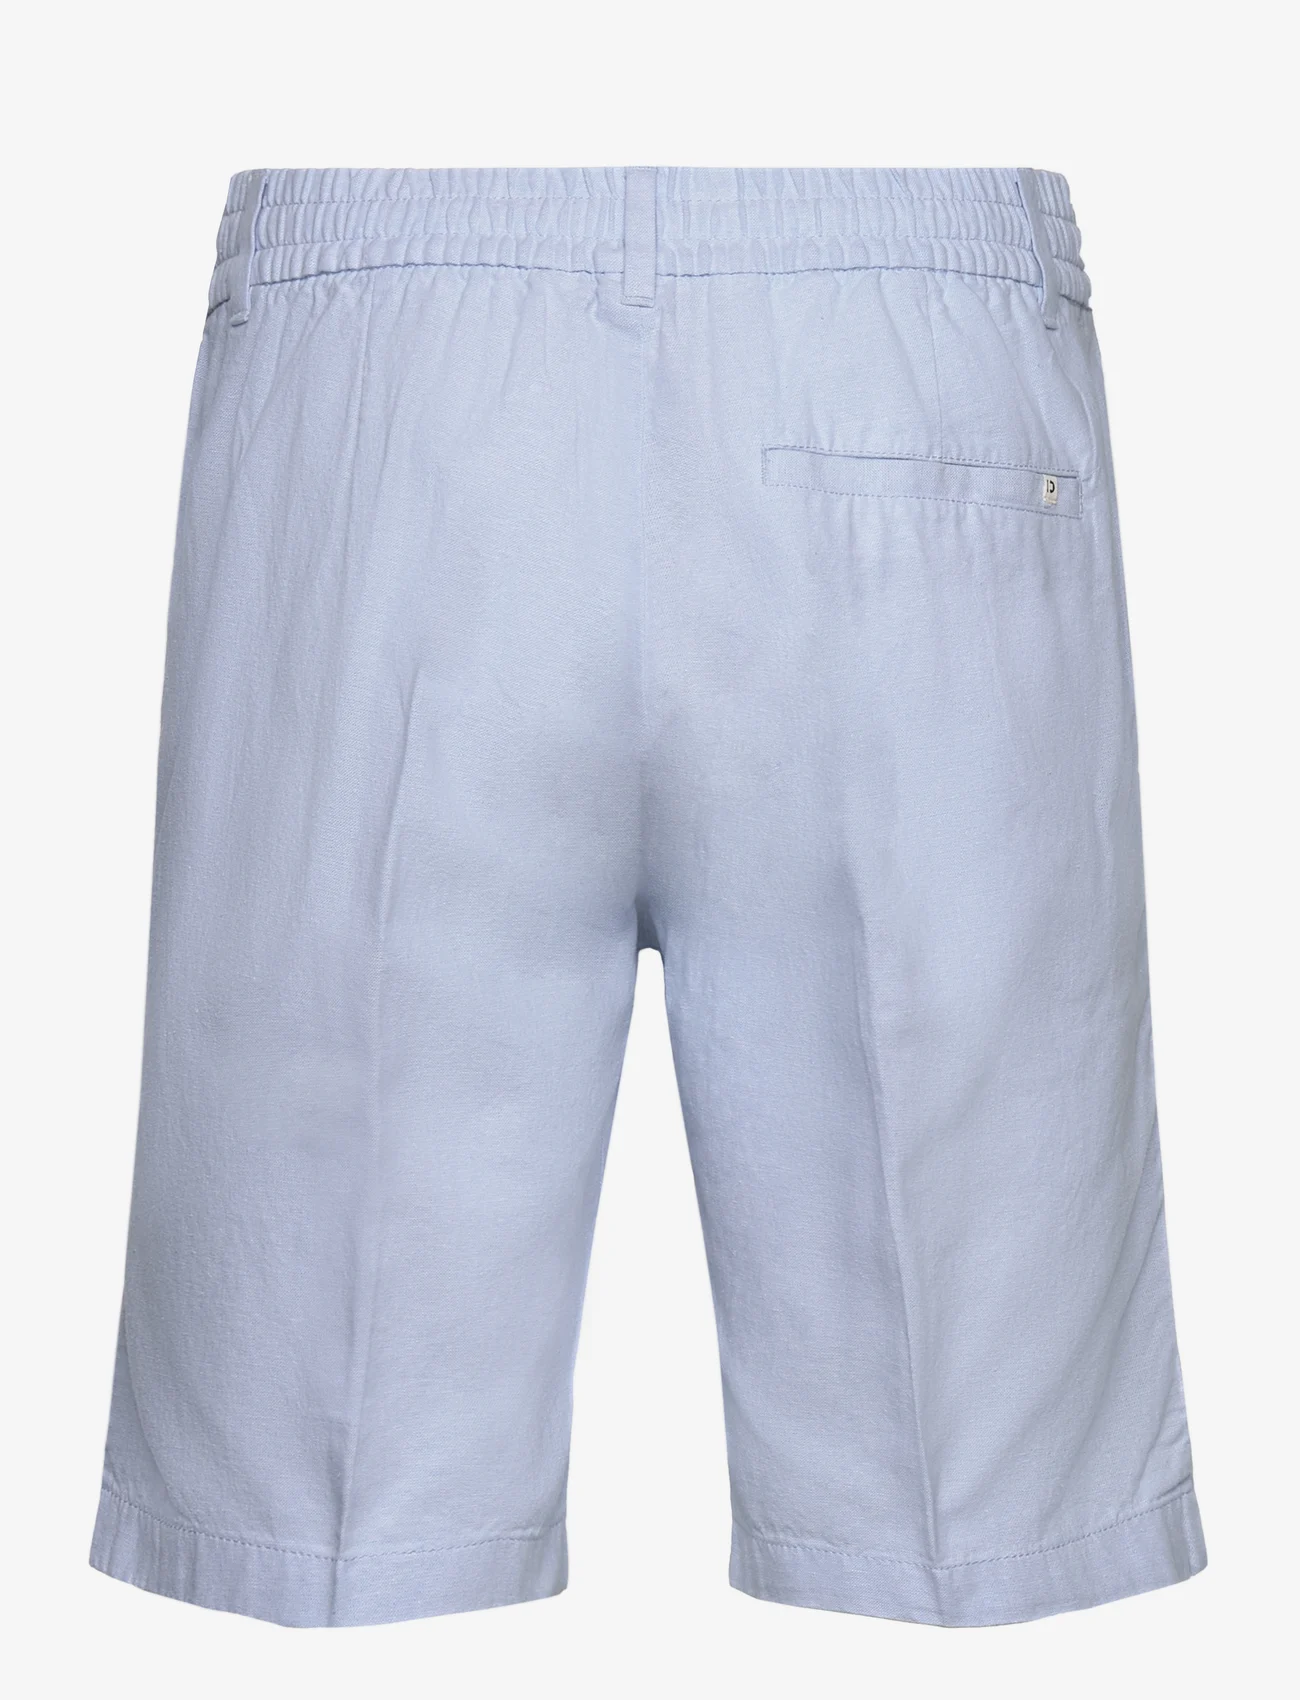 Tom Tailor - regular linen shorts - linen shorts - soft powder blue chambray - 1